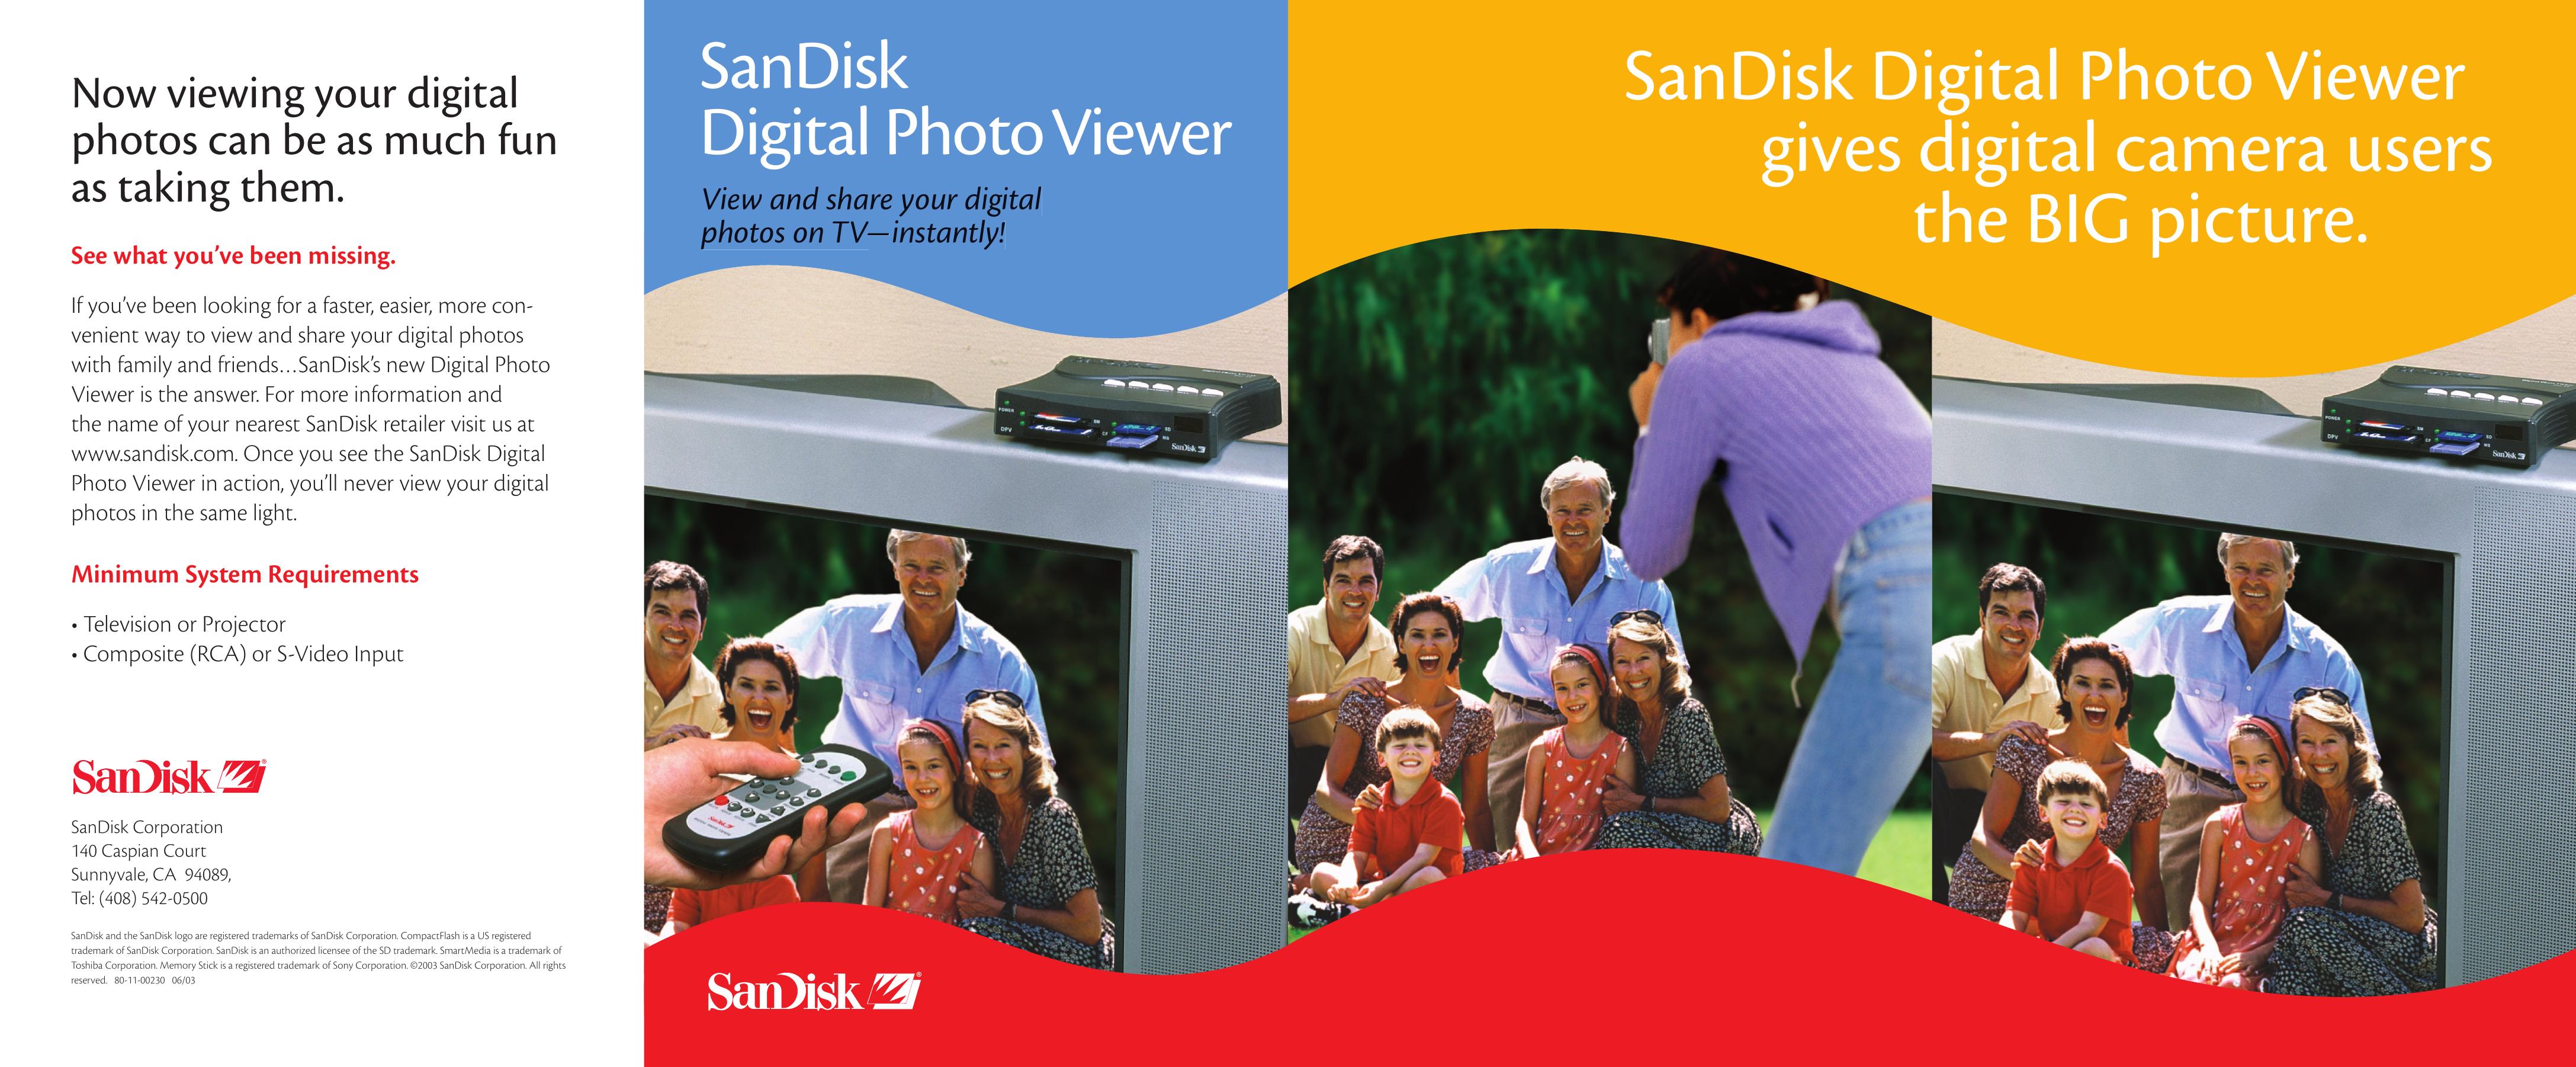 SanDisk Digital Photo Viewer Digital Photo Frame User Manual